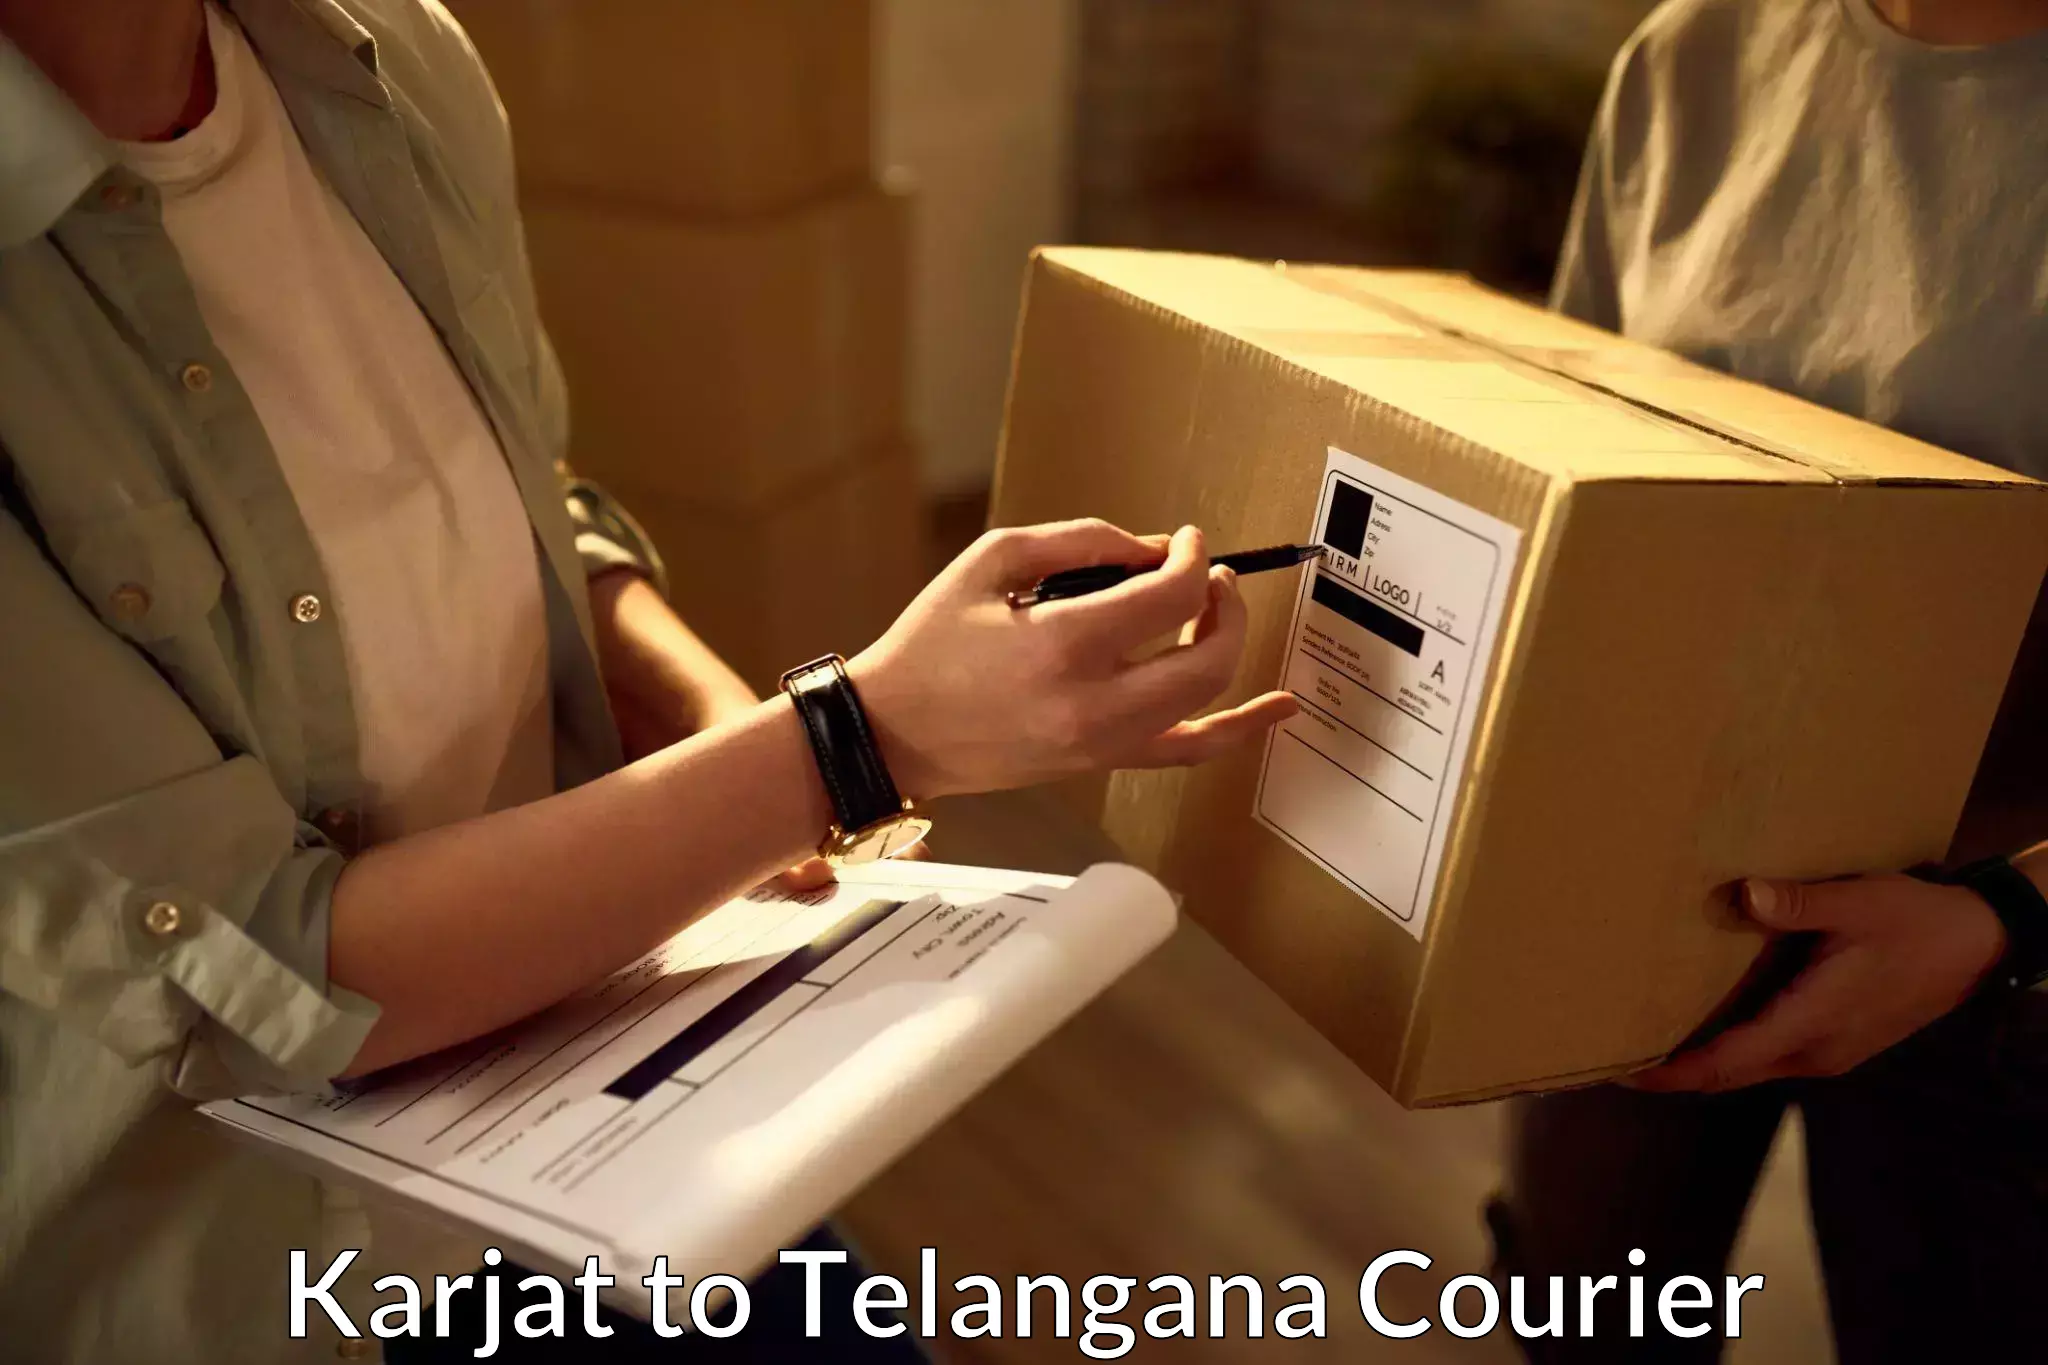 High-priority parcel service Karjat to Peddapalli